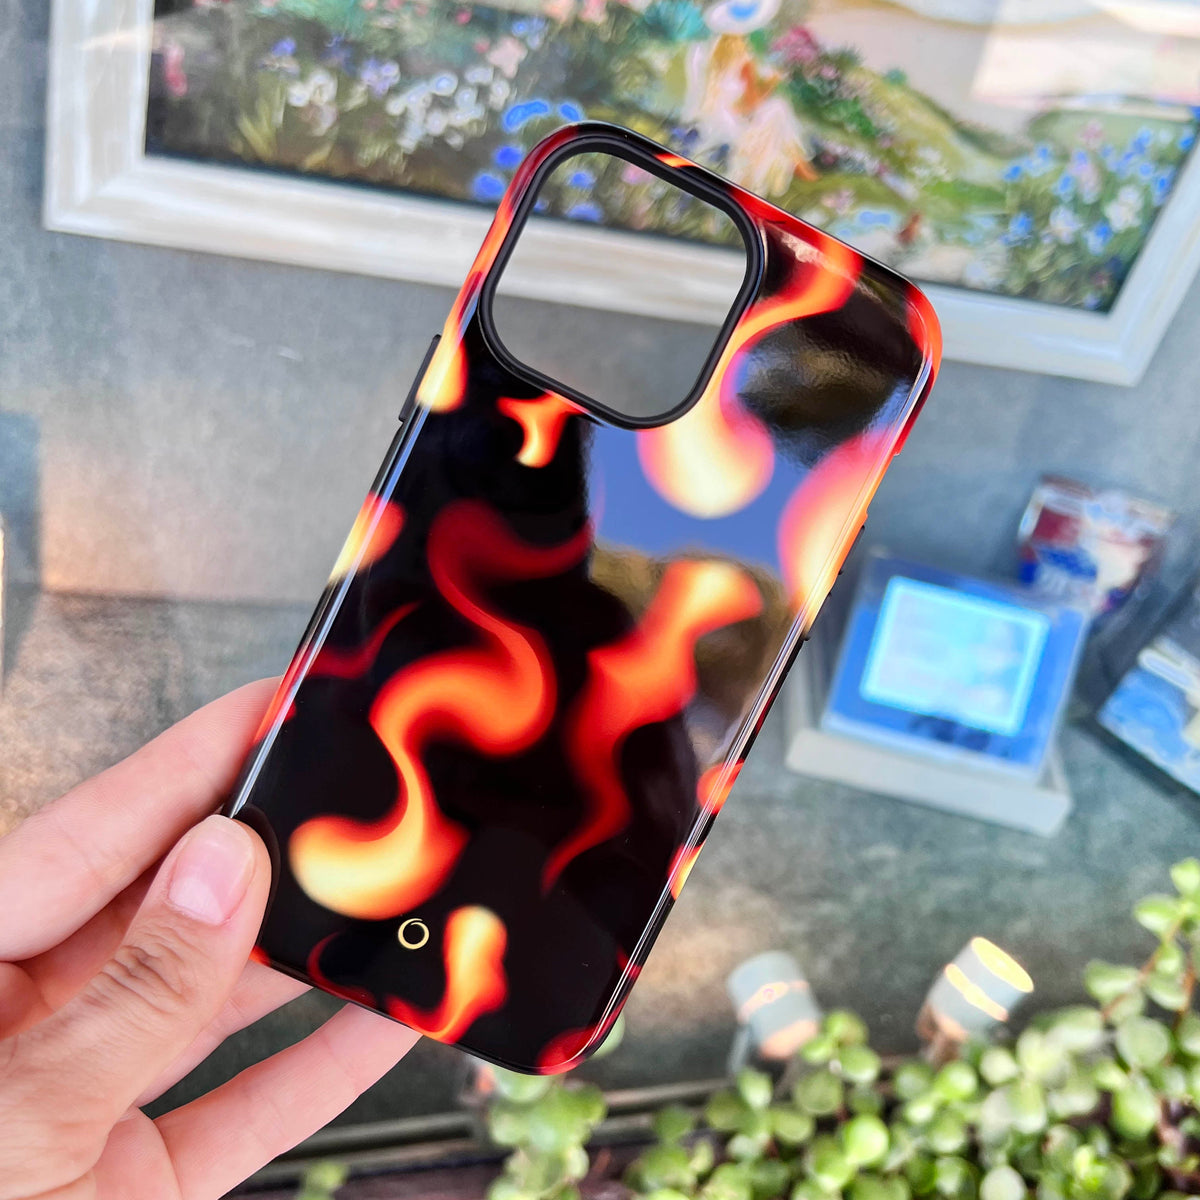 Groovy Orange Flame iPhone Case - iPhone 12 Pro